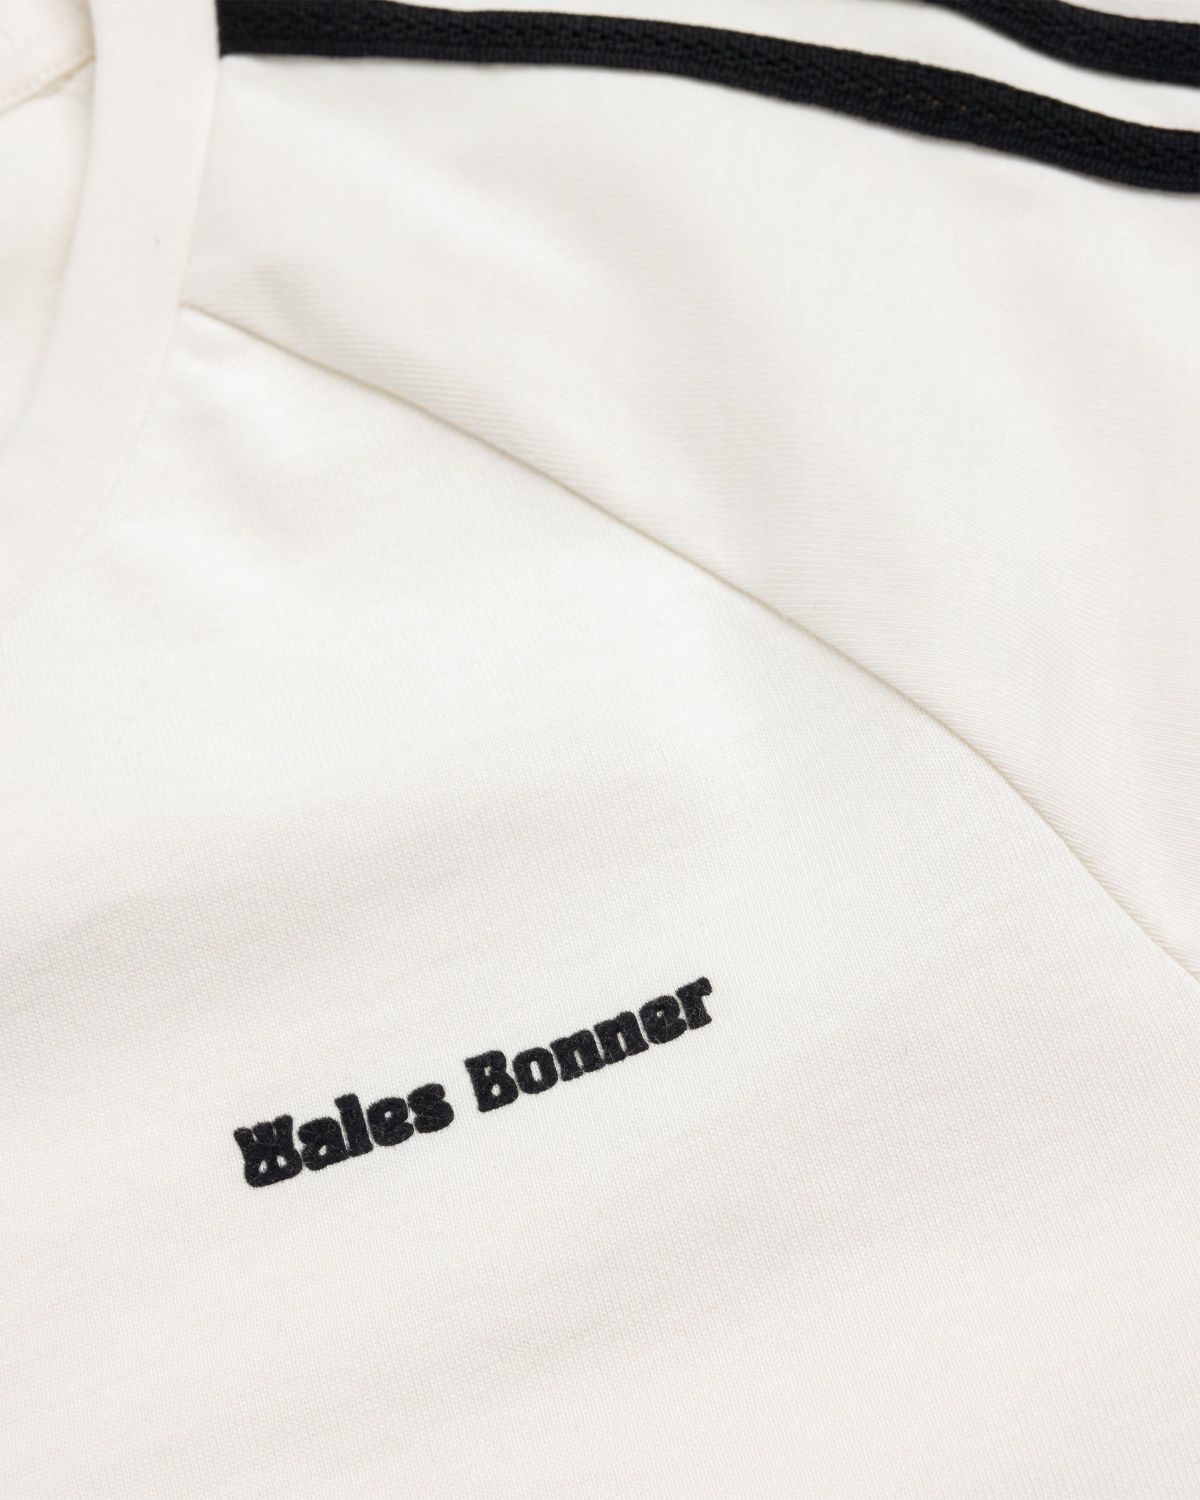 Adidas x Wales Bonner – Organic Cotton Tee Chalk White - T-shirts - White - Image 6